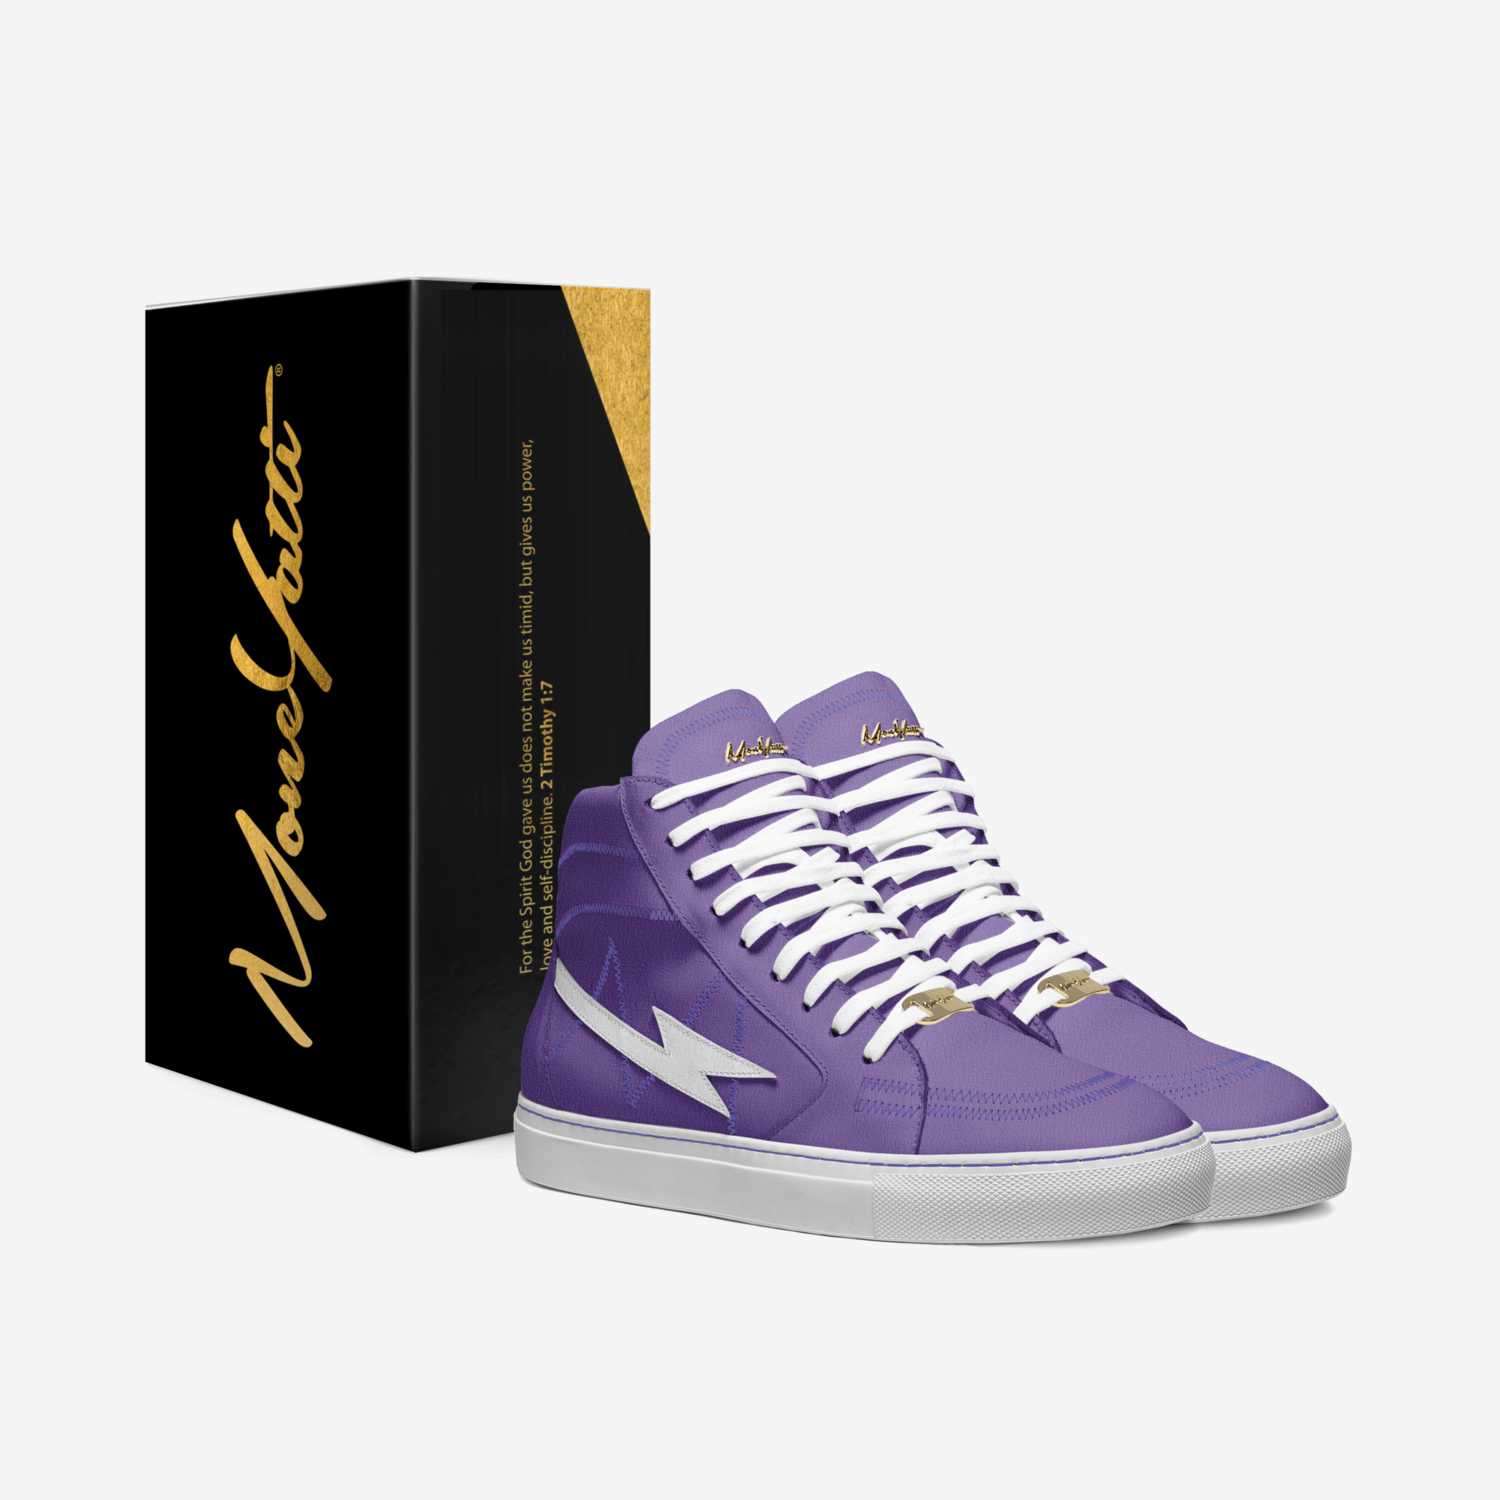 MONEYATTI REBEL 10 custom made in Italy shoes by Moneyatti Brand | Box view